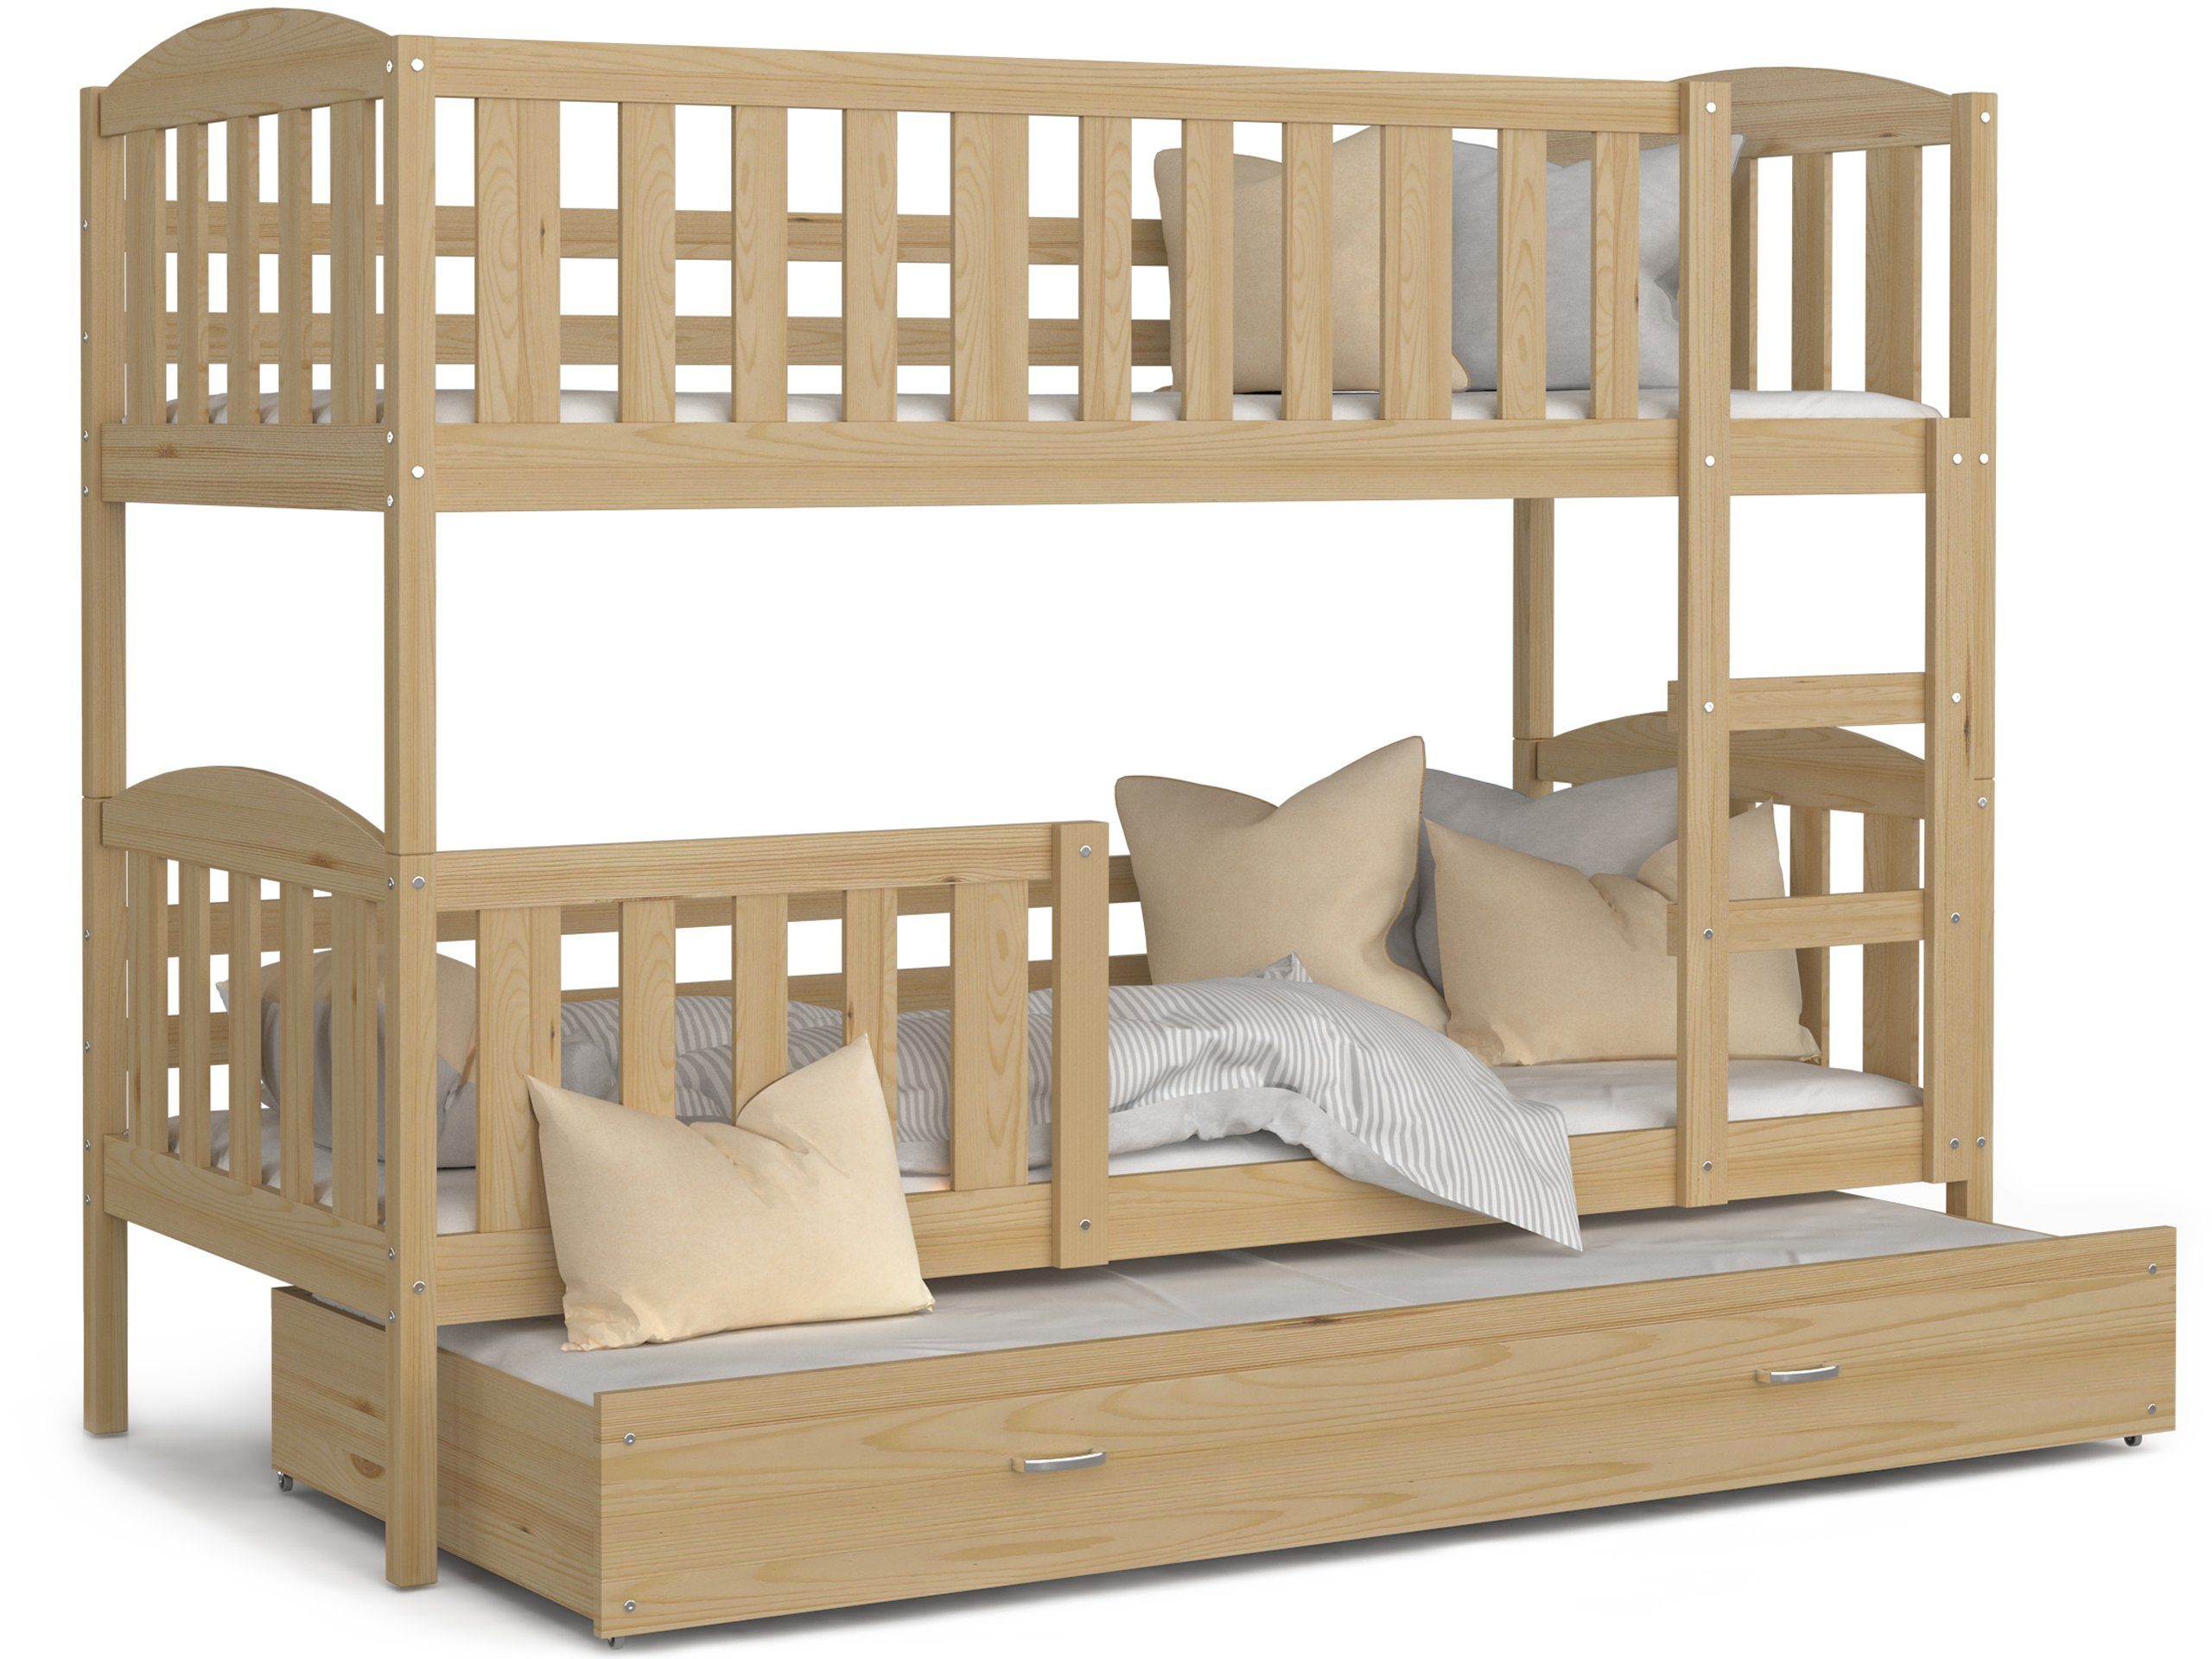 Siblo Kinderbett Massivholz, Rupert Möbelplatte Schaummatratzen), (Flexibler Bett Lattenrost, Kiefer Schublade, Sicherheitsbarriere